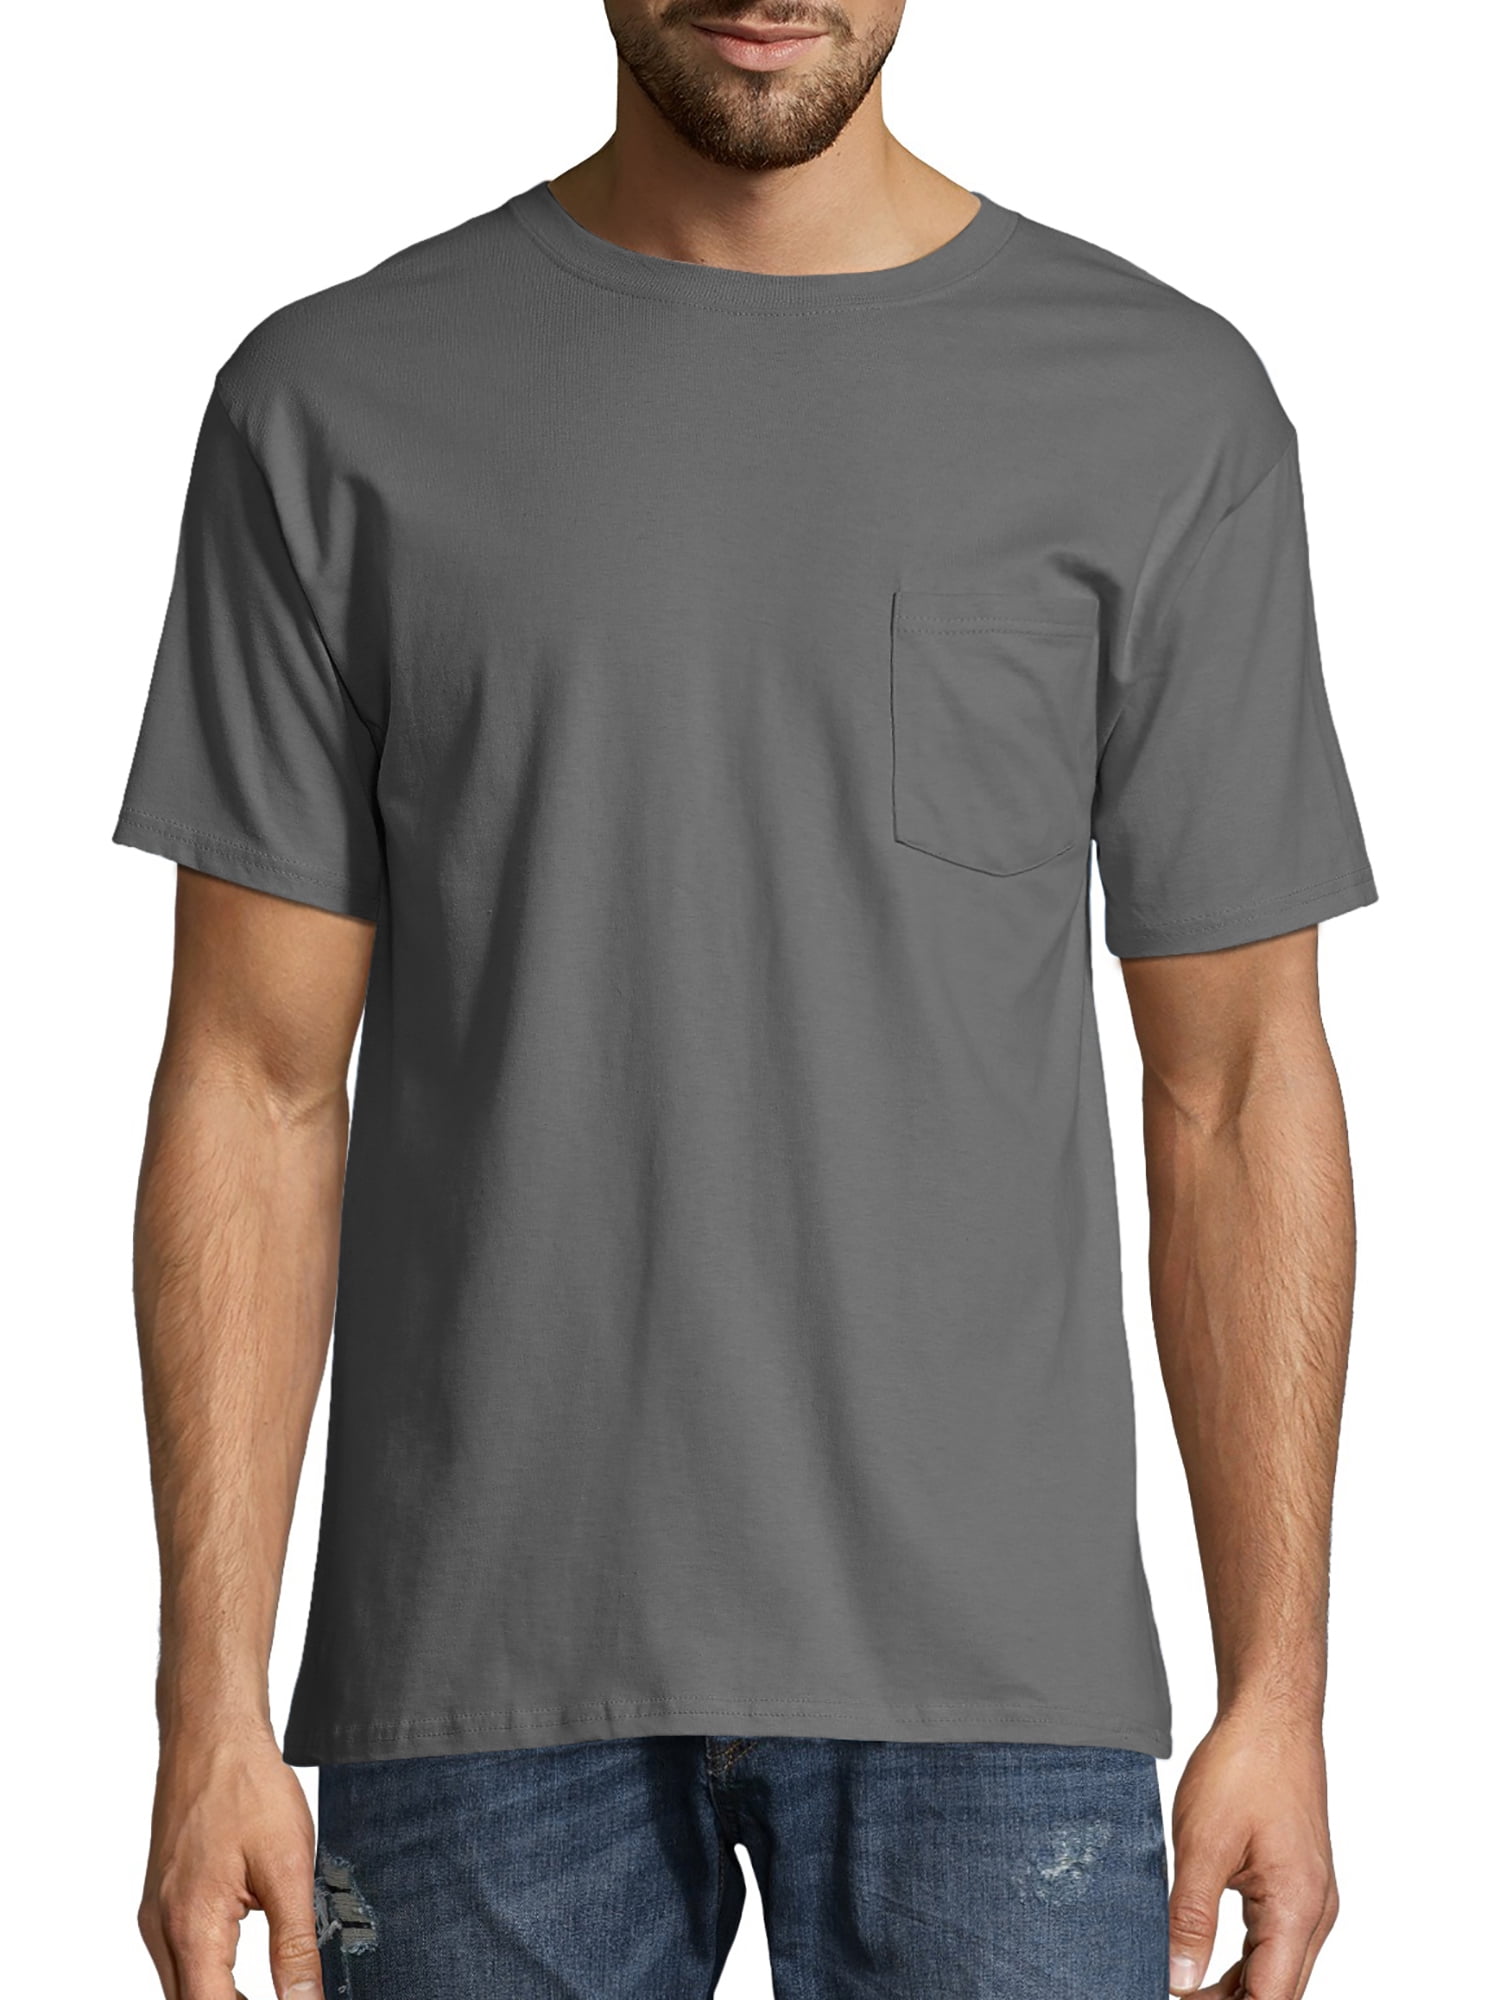 Hanes Men's Authentic Pocket T-Shirt Smoke Gray XL - Walmart.com